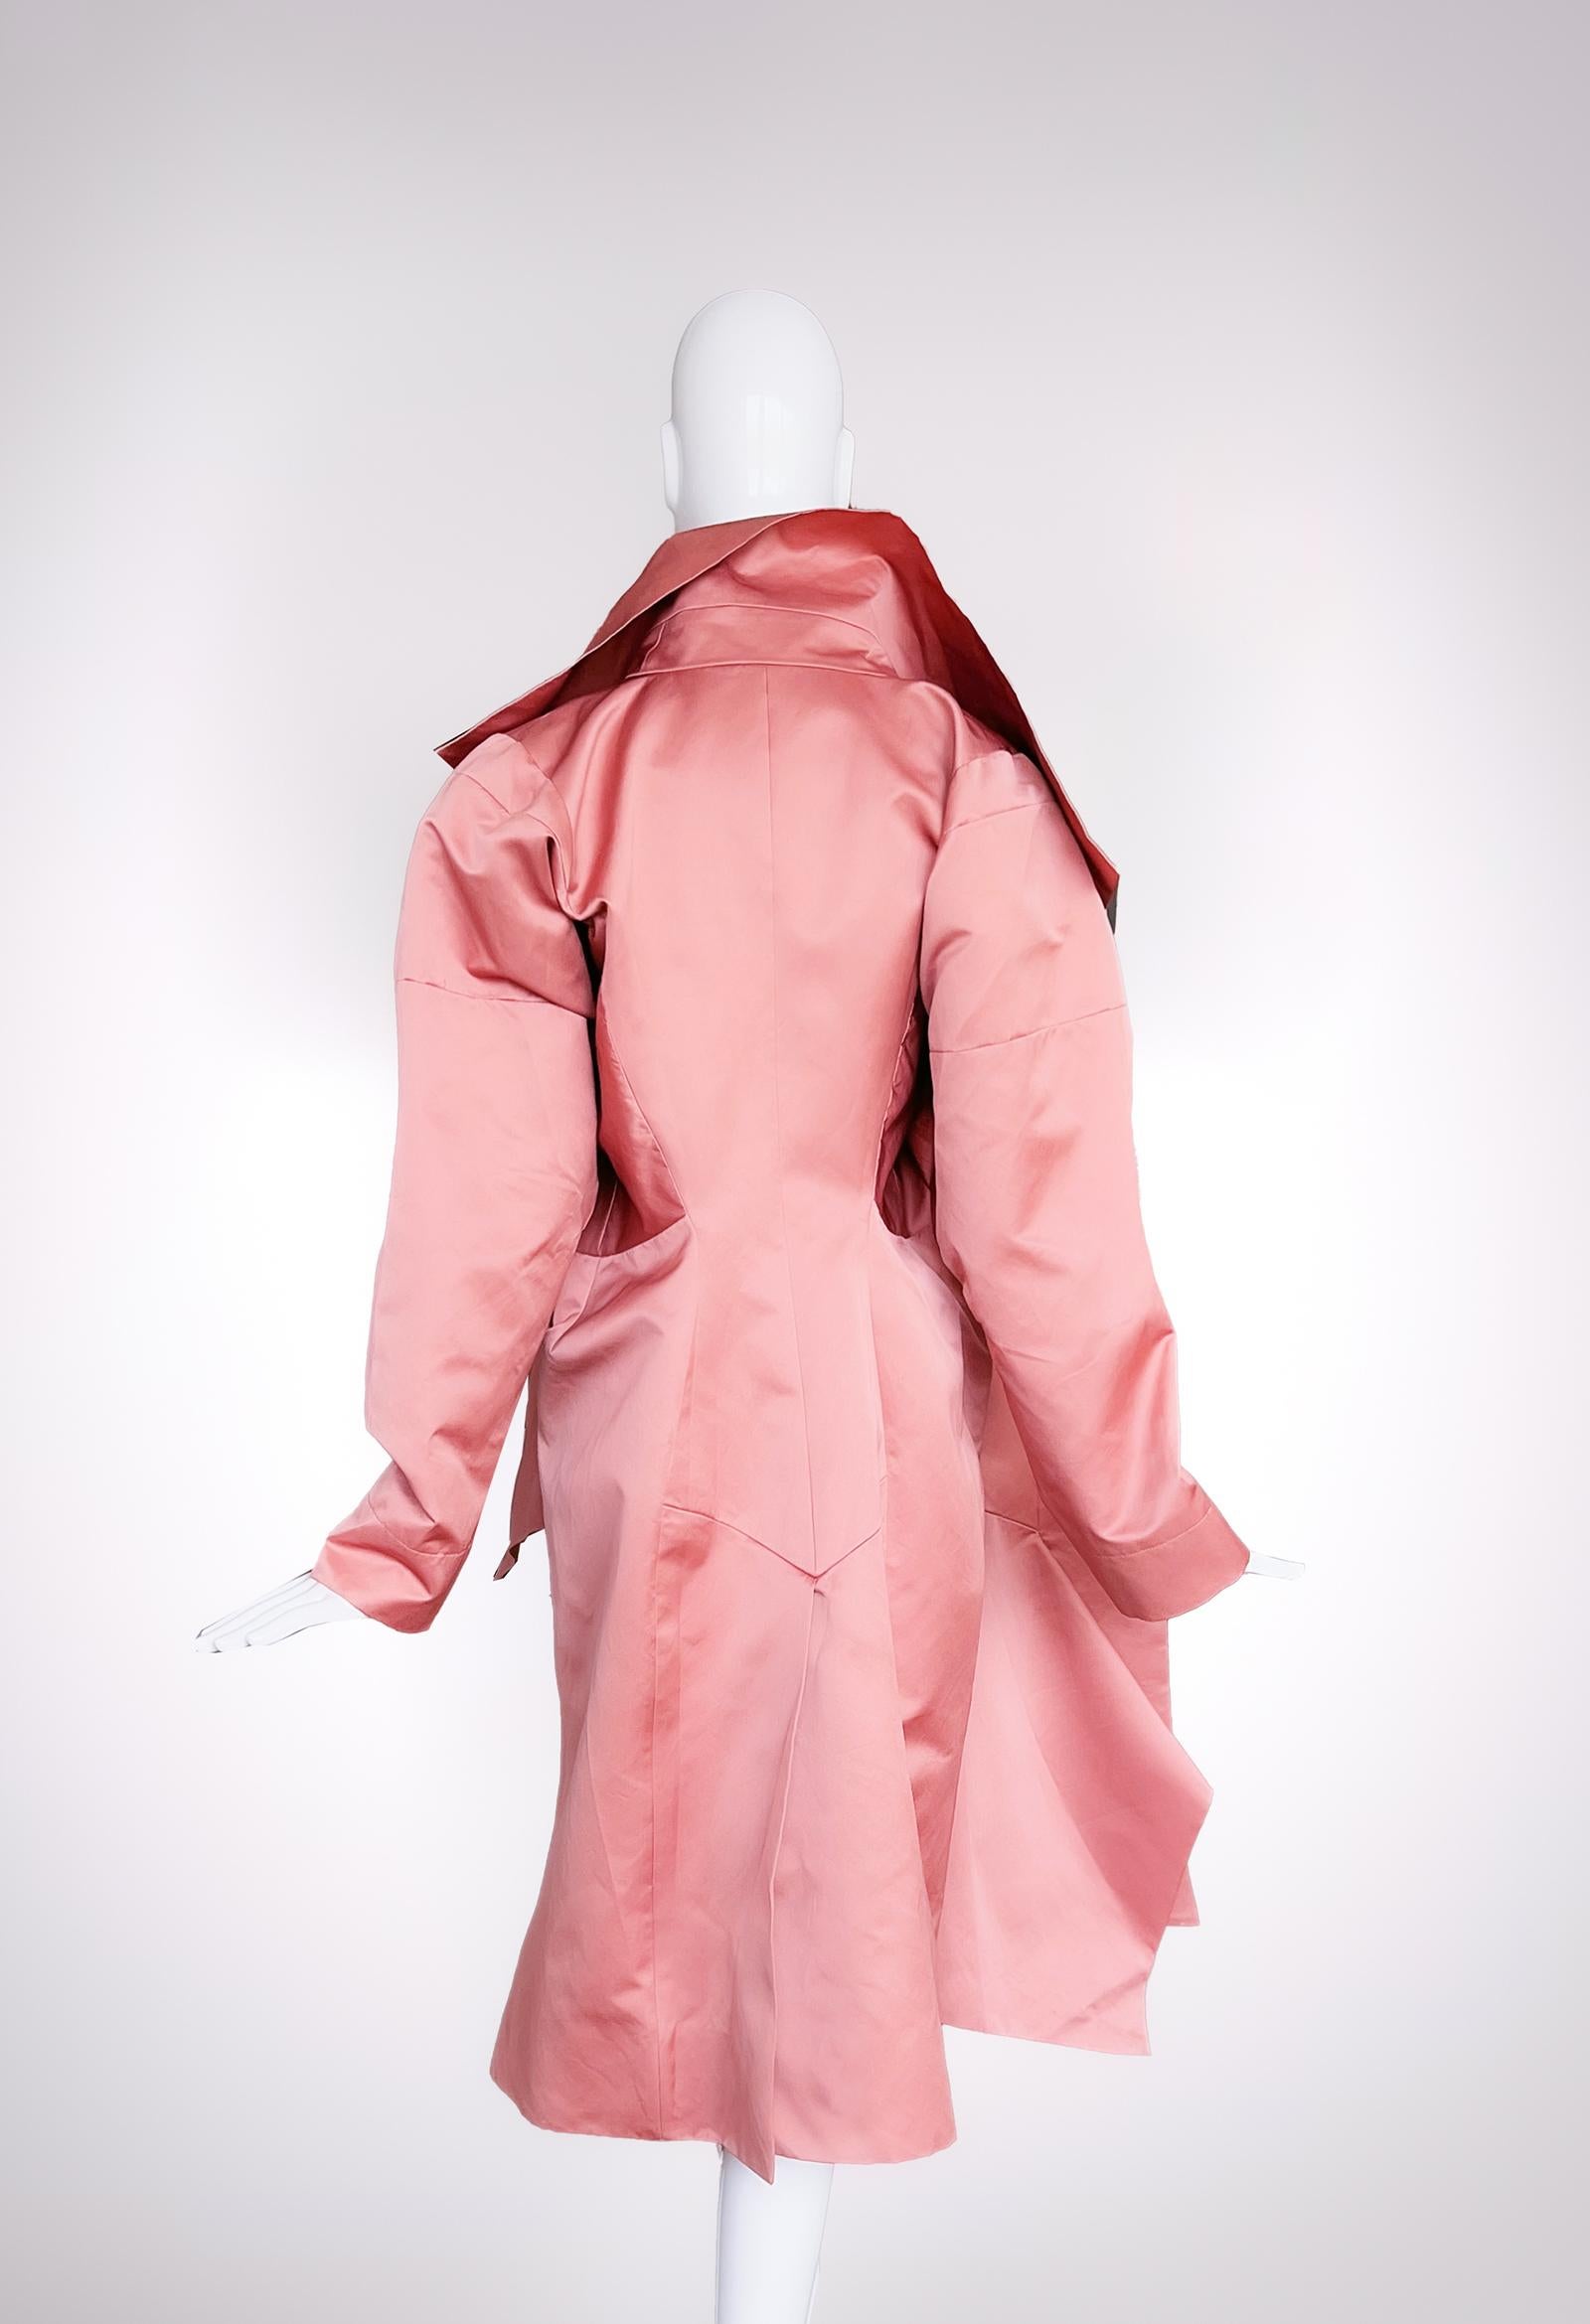 Vivienne Westwood SS 2021 BAT COAT Satin Jacket Oversize Damatic For Sale 2